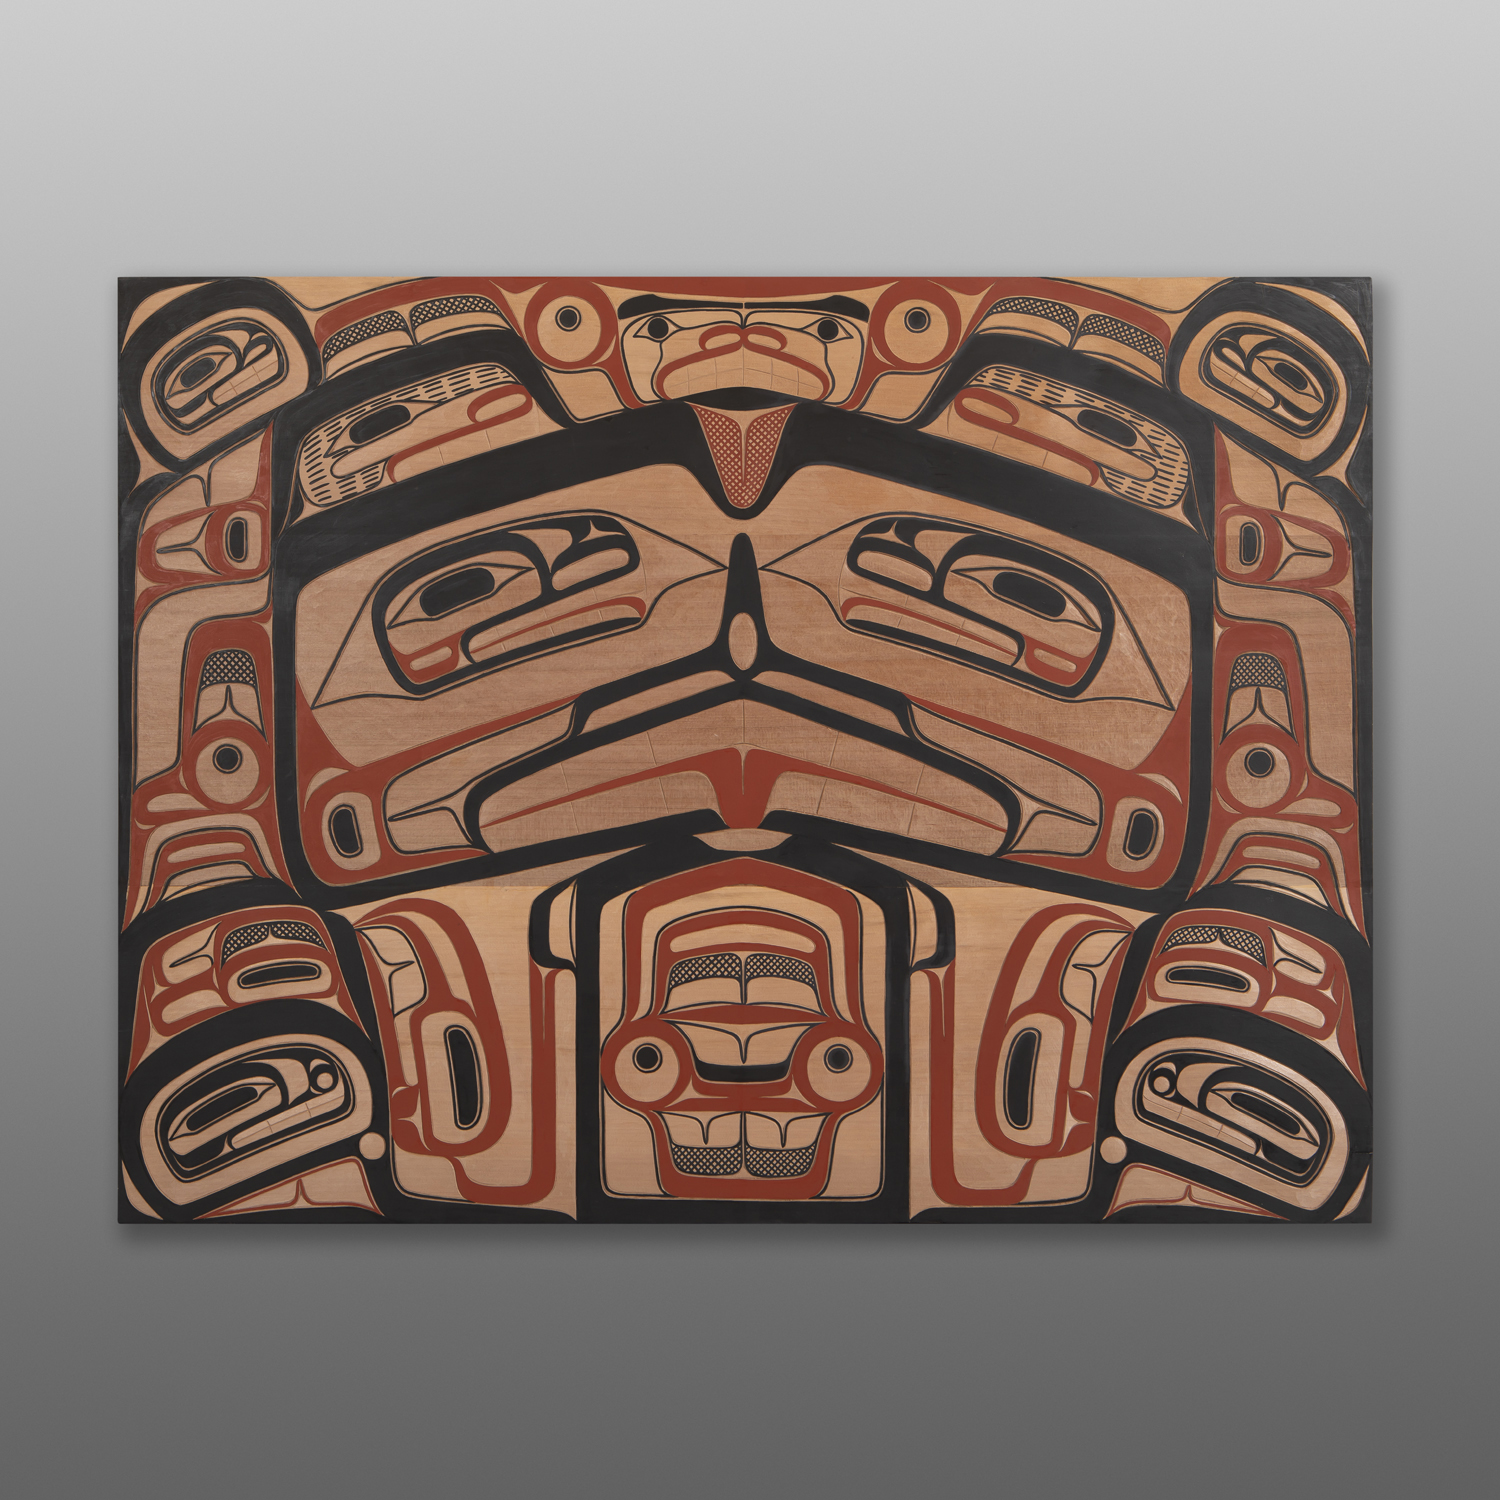 Bear Panel
David Boxley
TsimshianRed cedar, paint
48" x 36" x 1½"
$$10,000